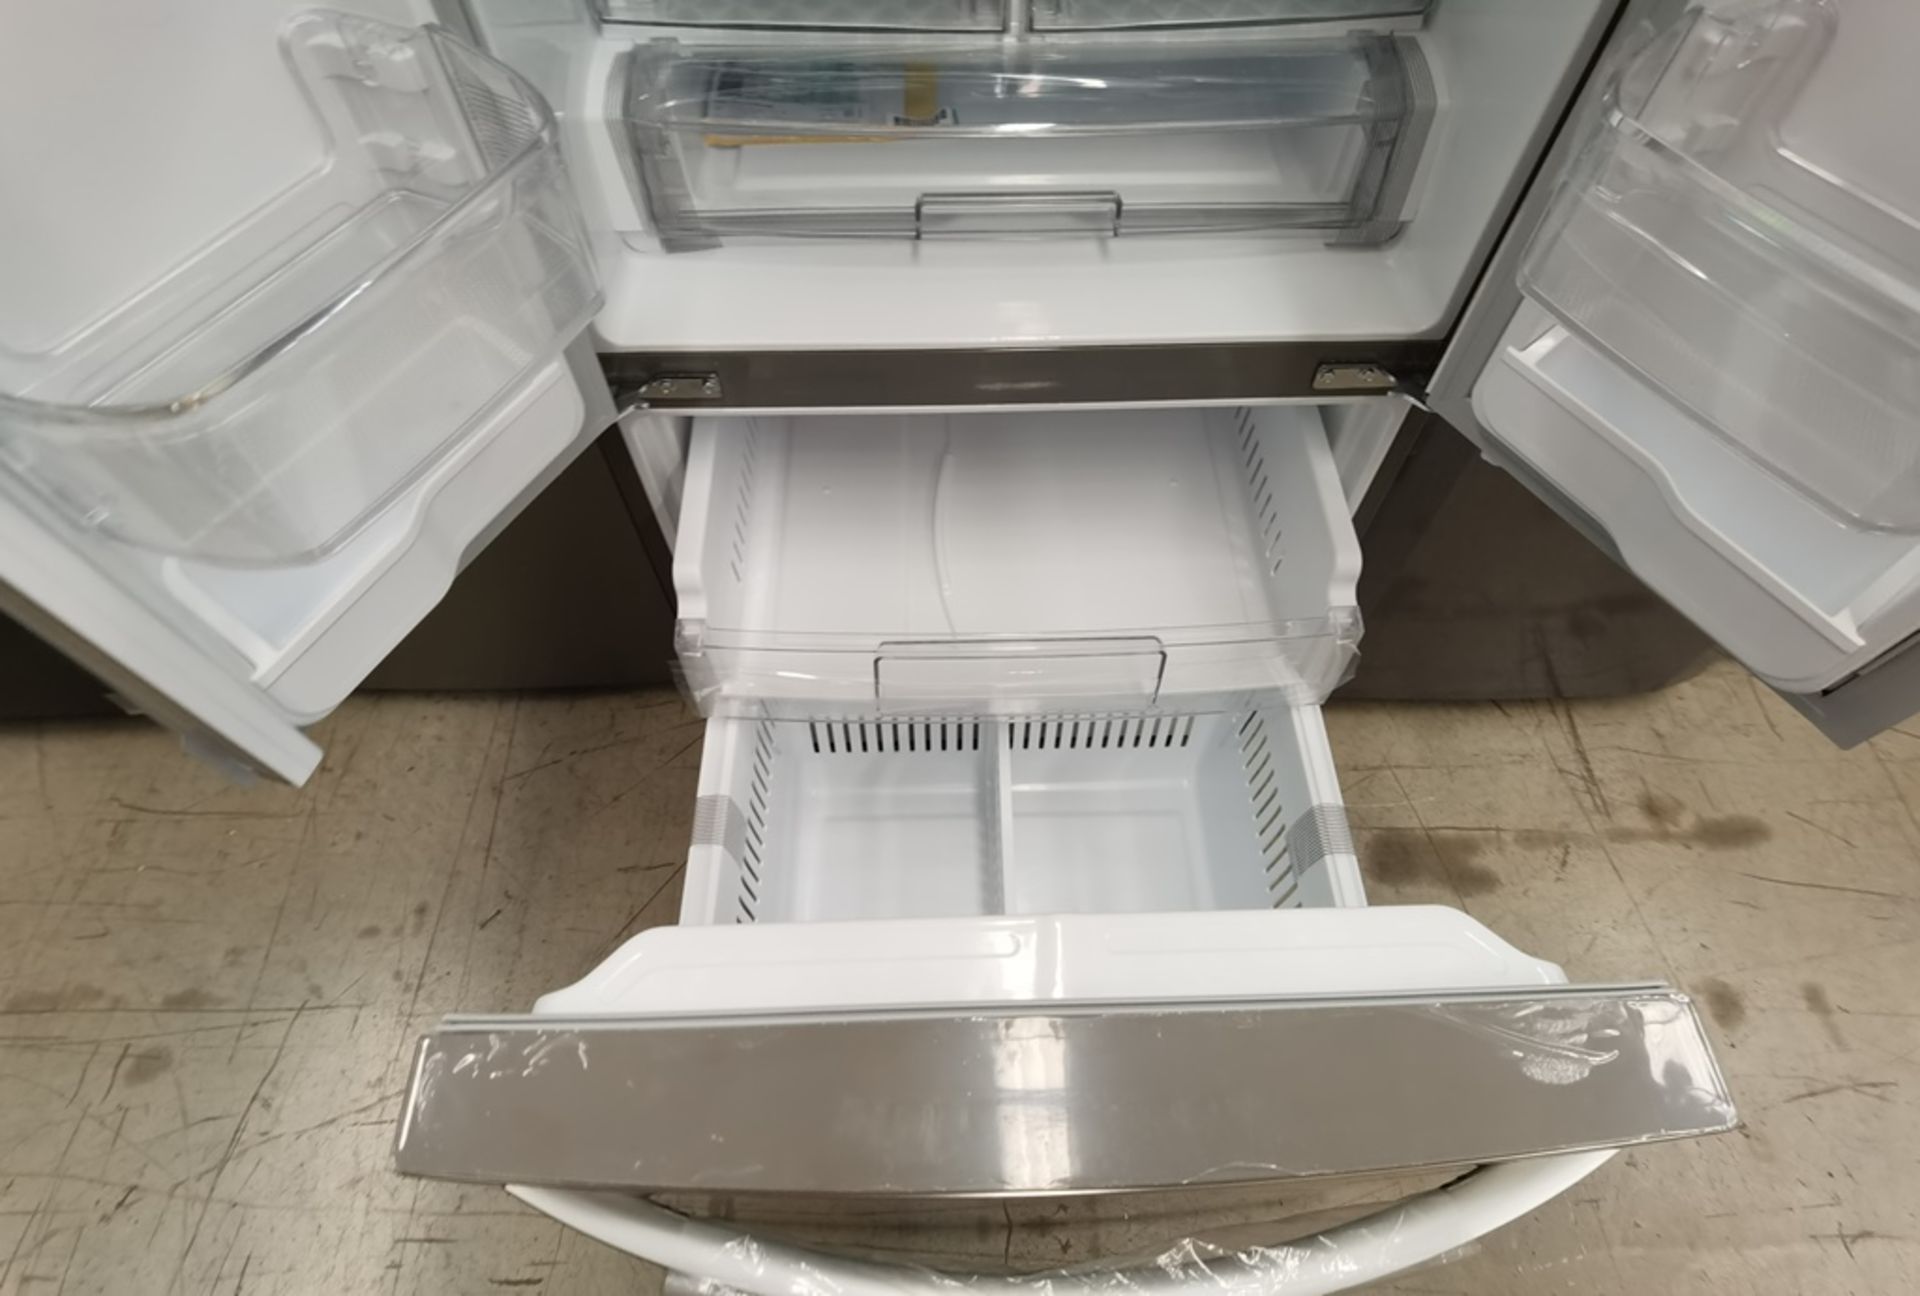 1 Refrigerador Marca LG, Modelo GF22BGSK, Serie 208MRUy21230, Color Gris, Detalles Estéticos, Favor - Image 9 of 10